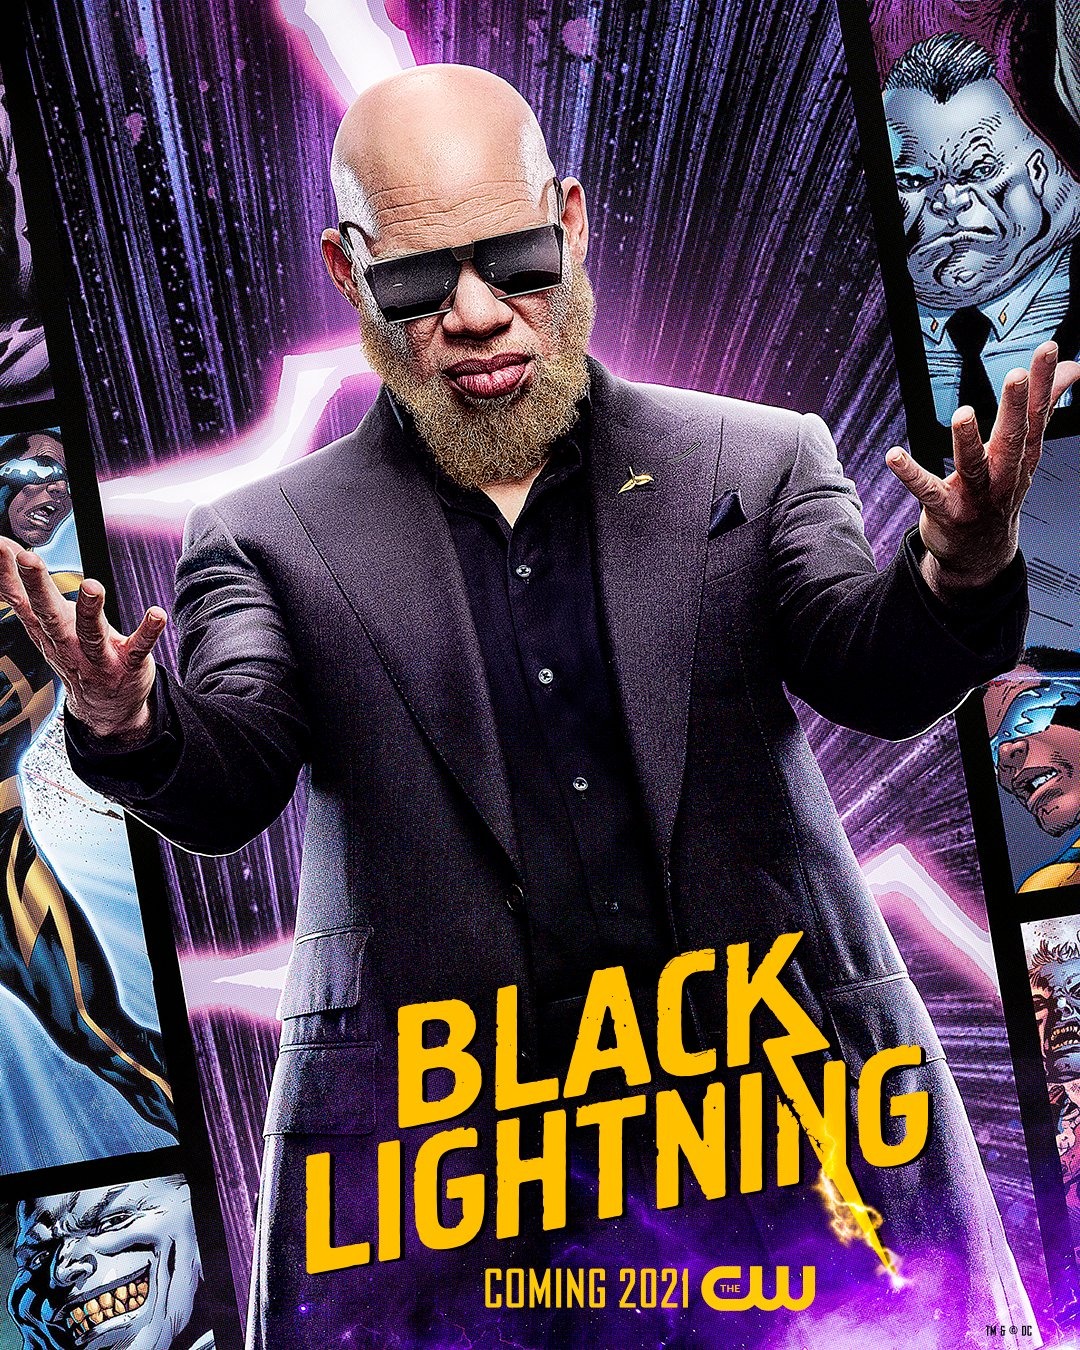 Extra Large TV Poster Image for Black Lightning (#10 of 14)